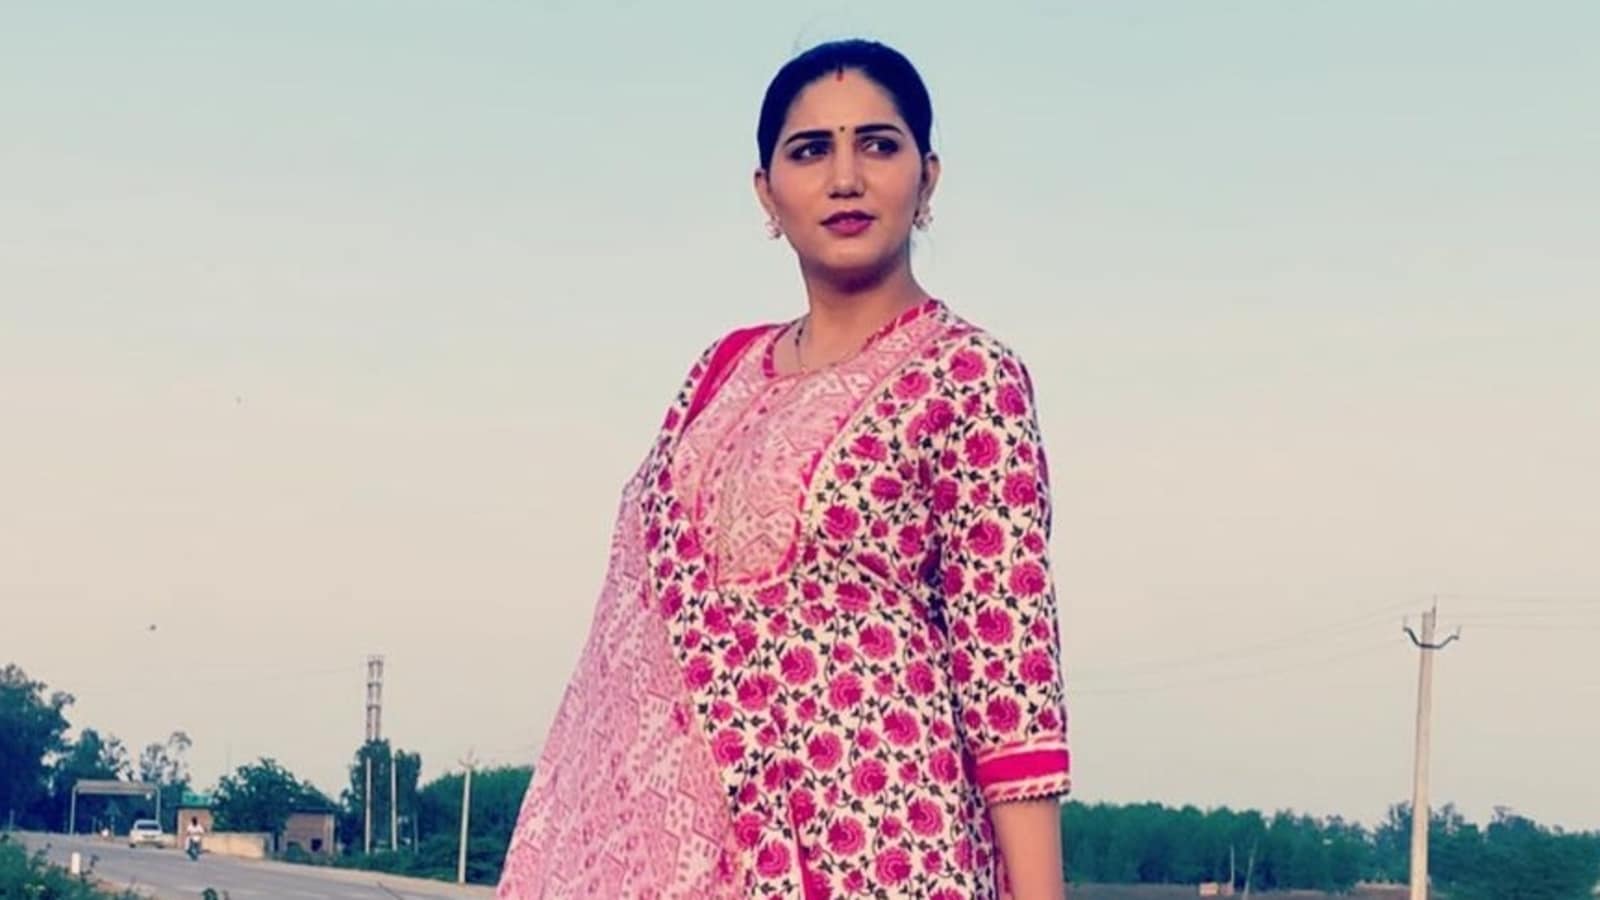 Sapna Choudhary Ki Xx Video Full Hd - Bigg Boss 11's Sapna Choudhary says her family got calls after rumours of  her death: 'It was very upsetting' - Hindustan Times